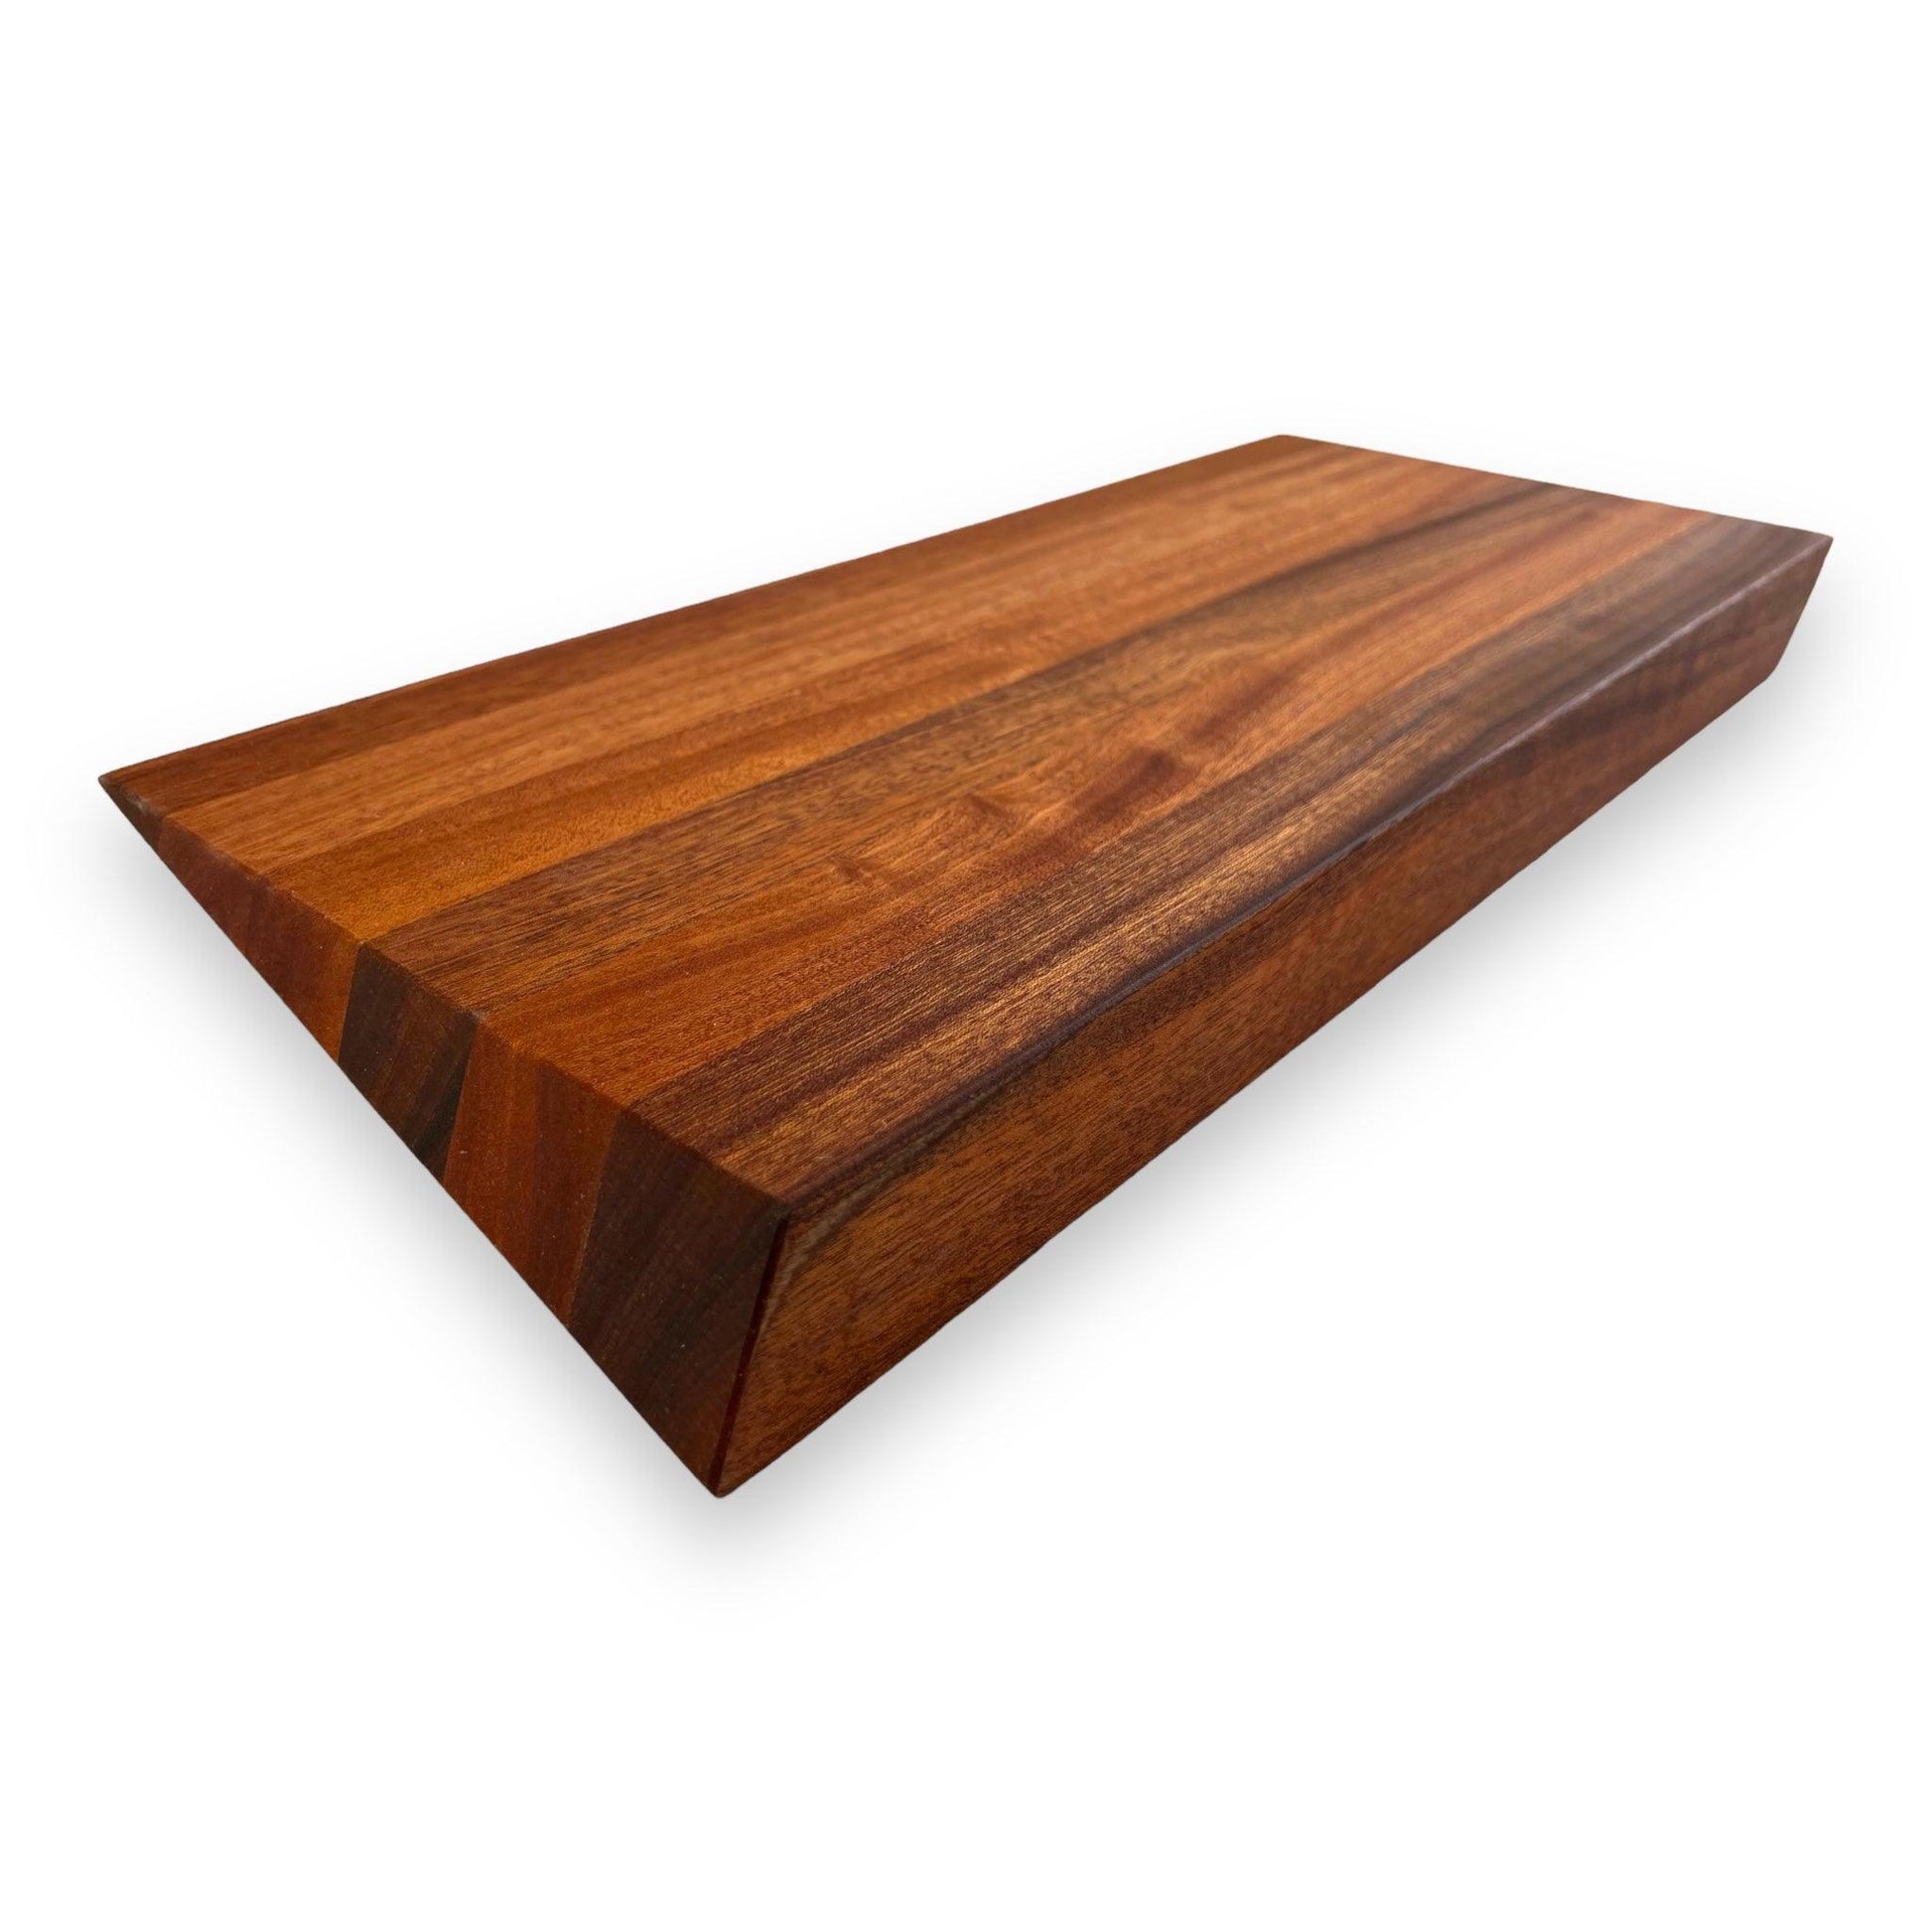 2" Sapele Mahogany Z-shaped cutting board - BOISWOOD